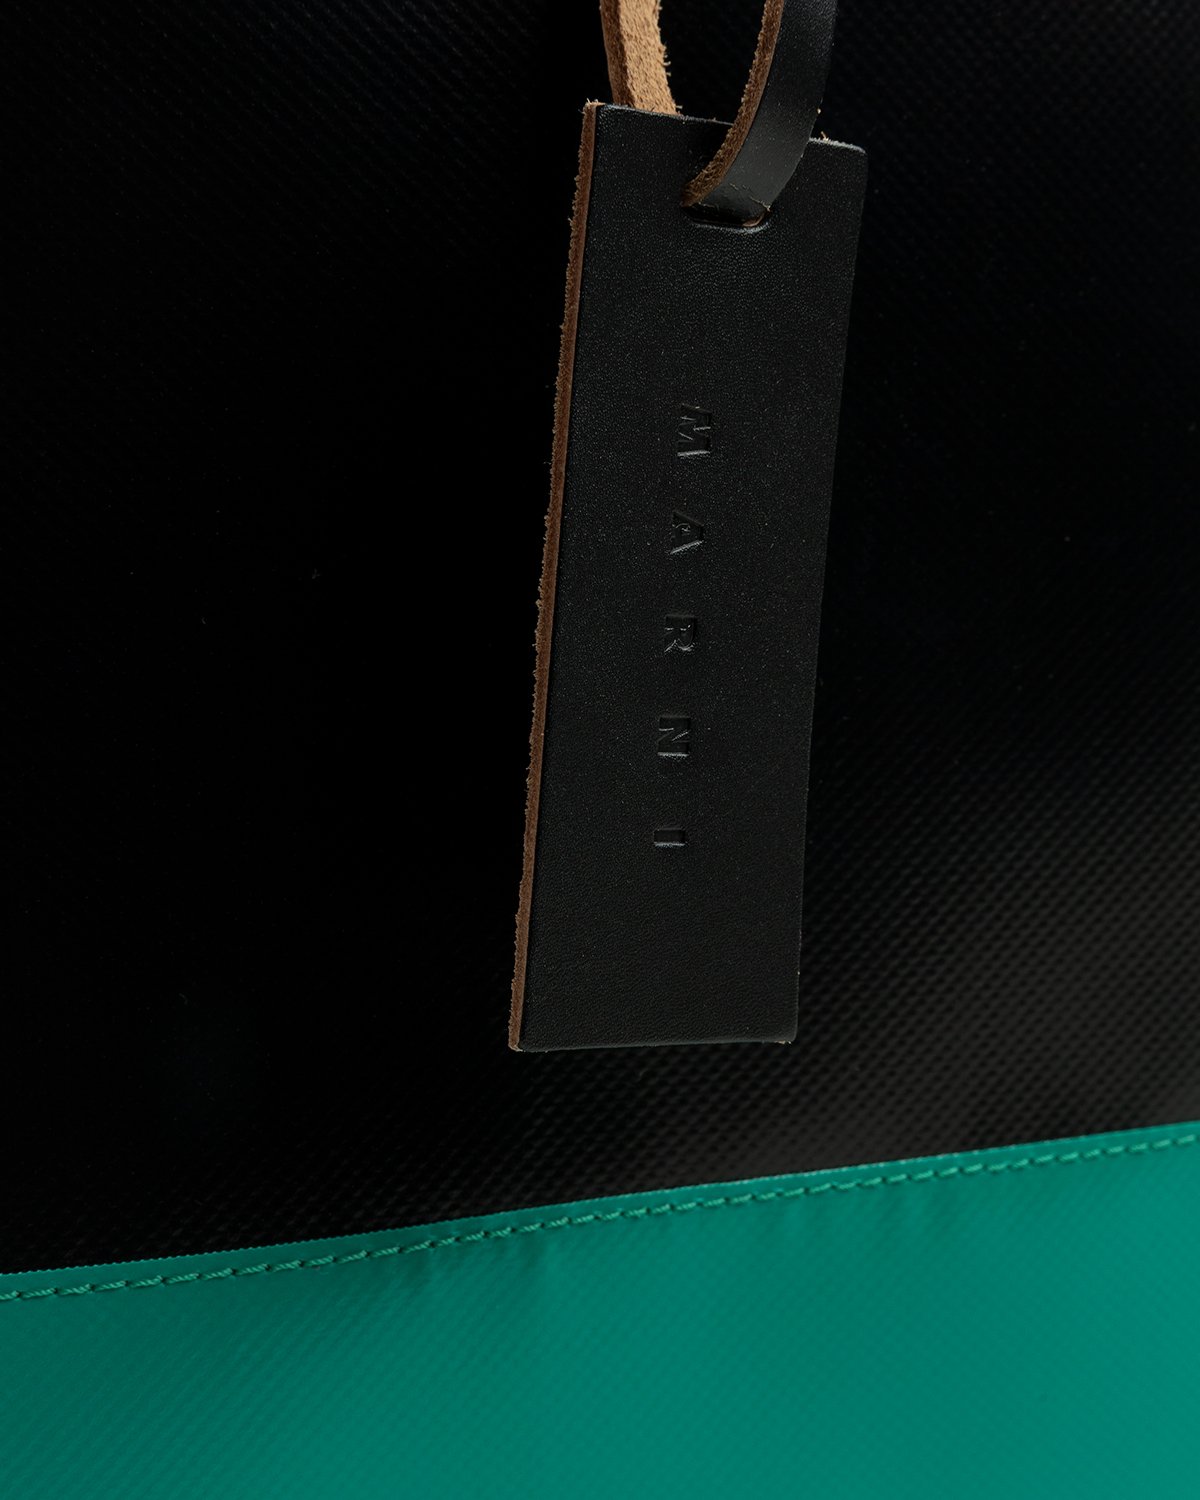 Marni - Tribeca Two-Tone Tote Bag Black/Green - Accessories - Black - Image 4